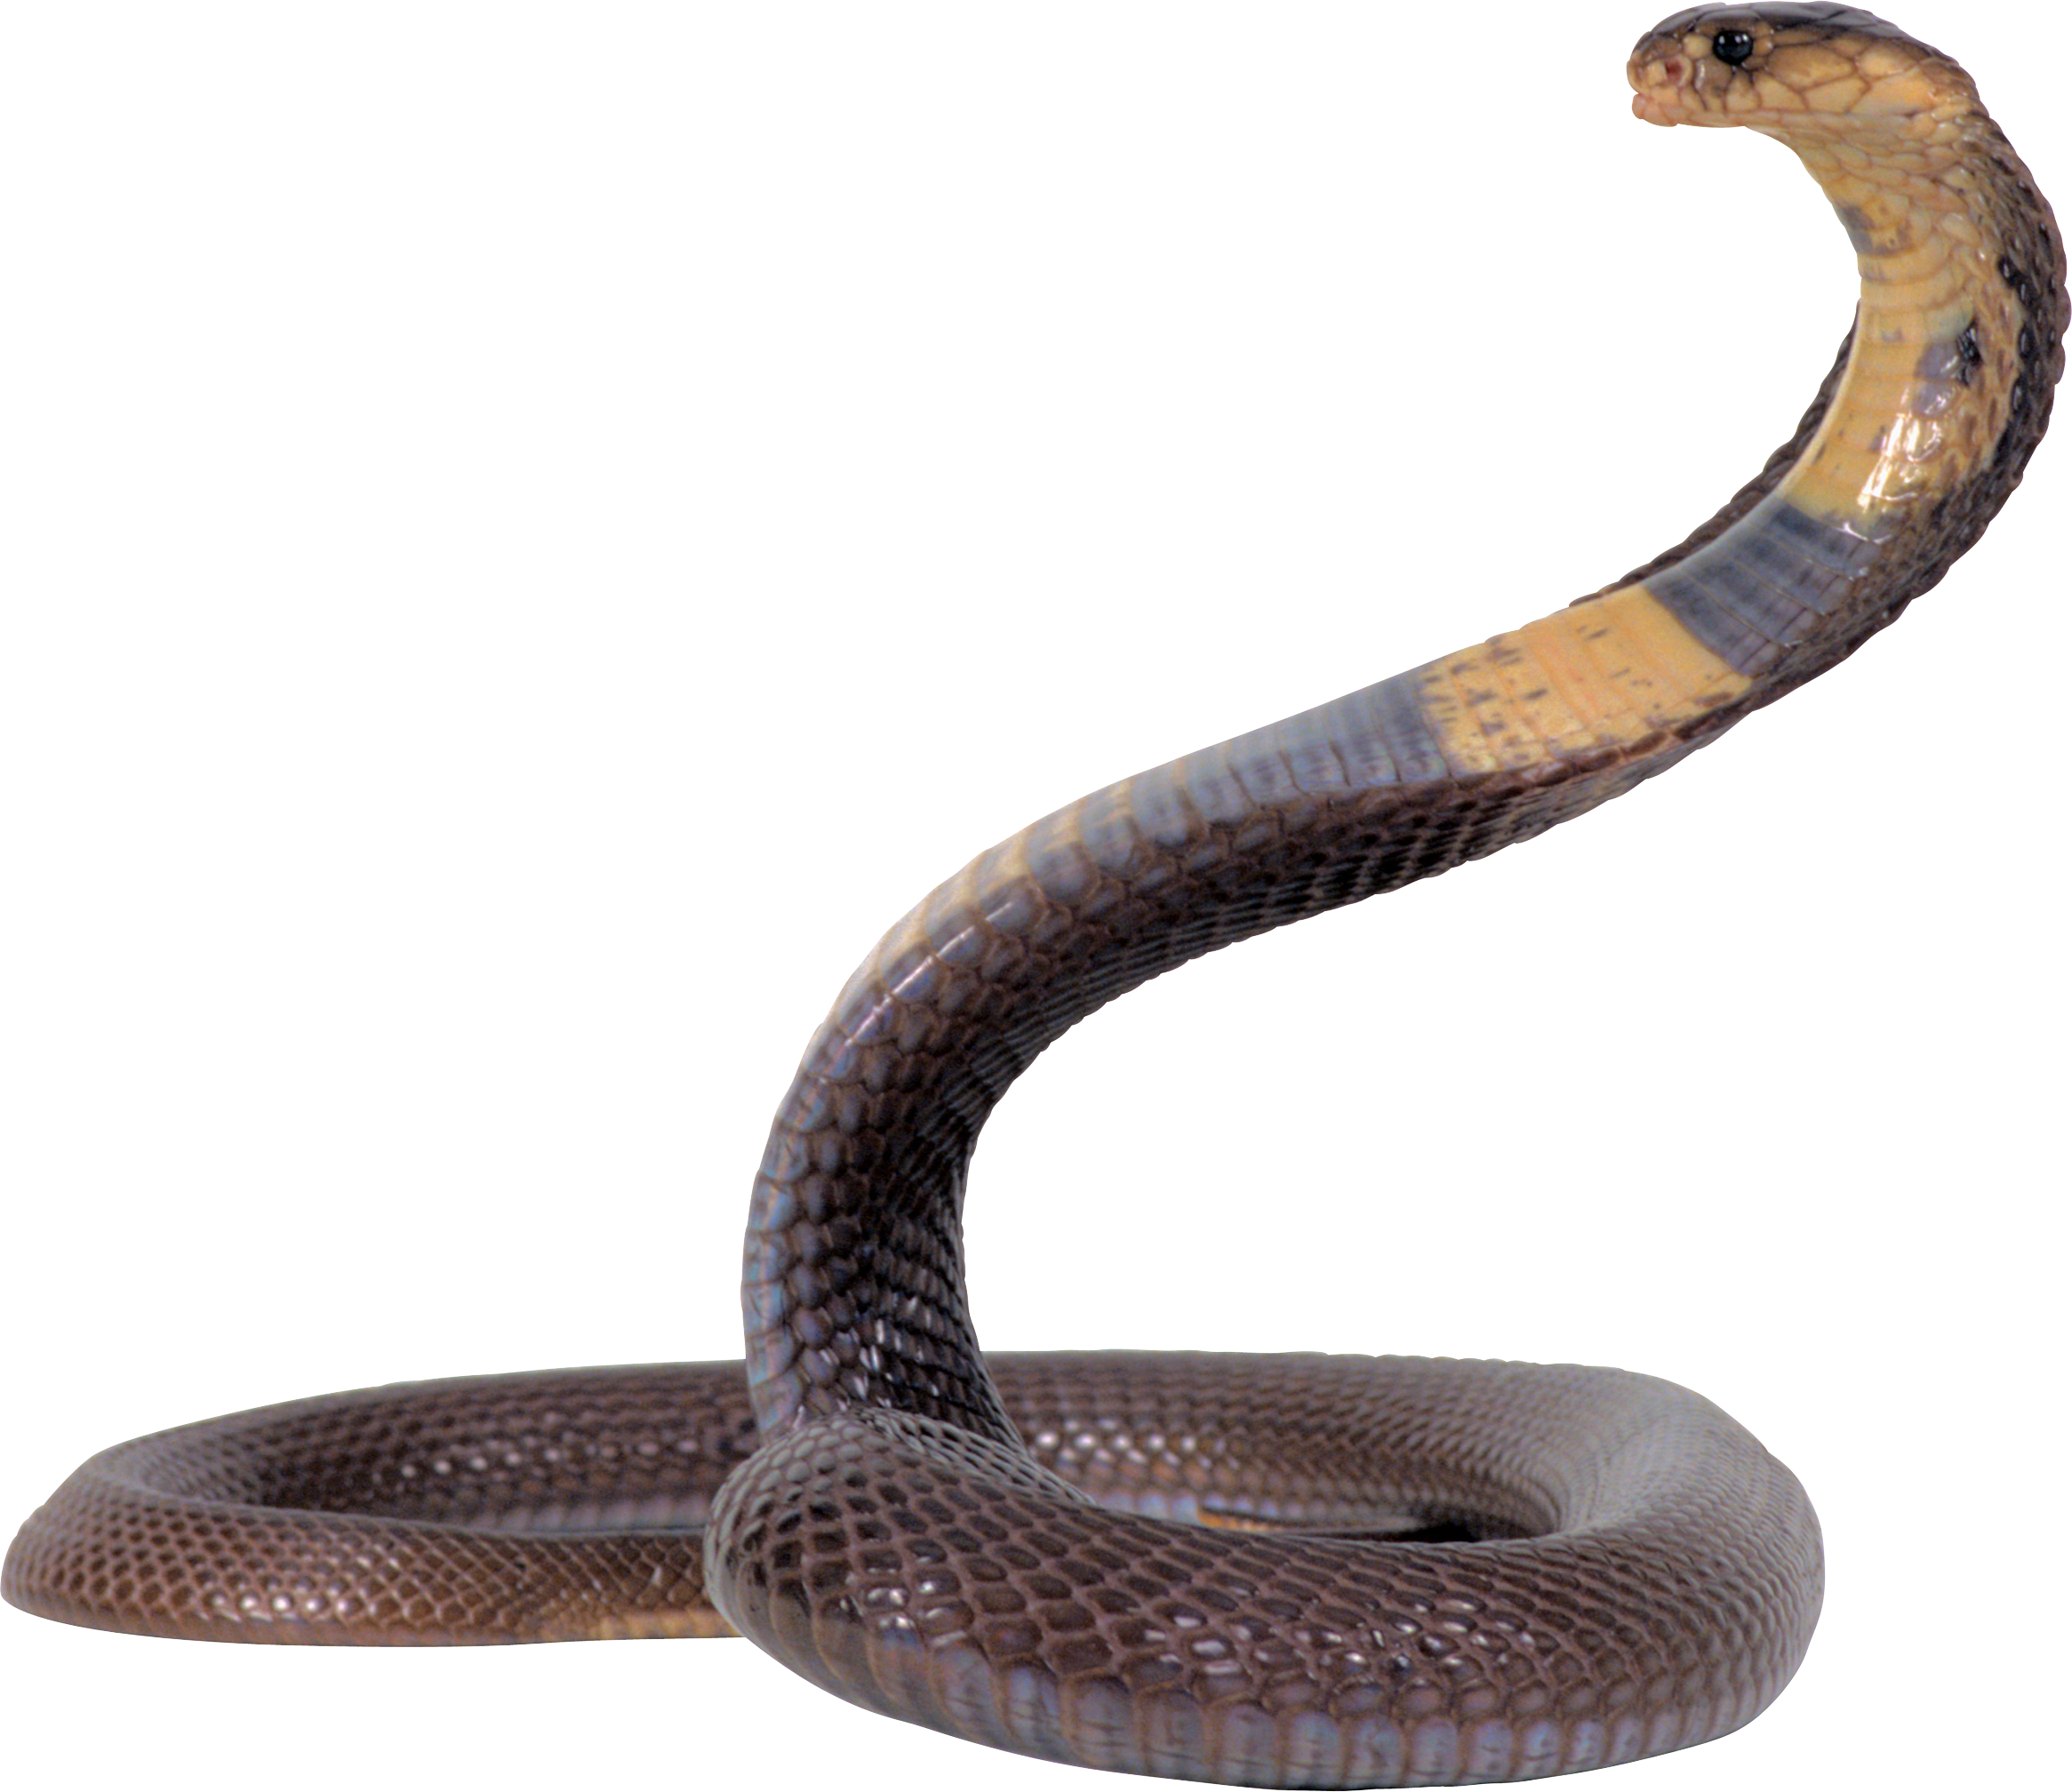 Cobra Snake Png Image, Free Download Picture - Anaconda, Transparent background PNG HD thumbnail